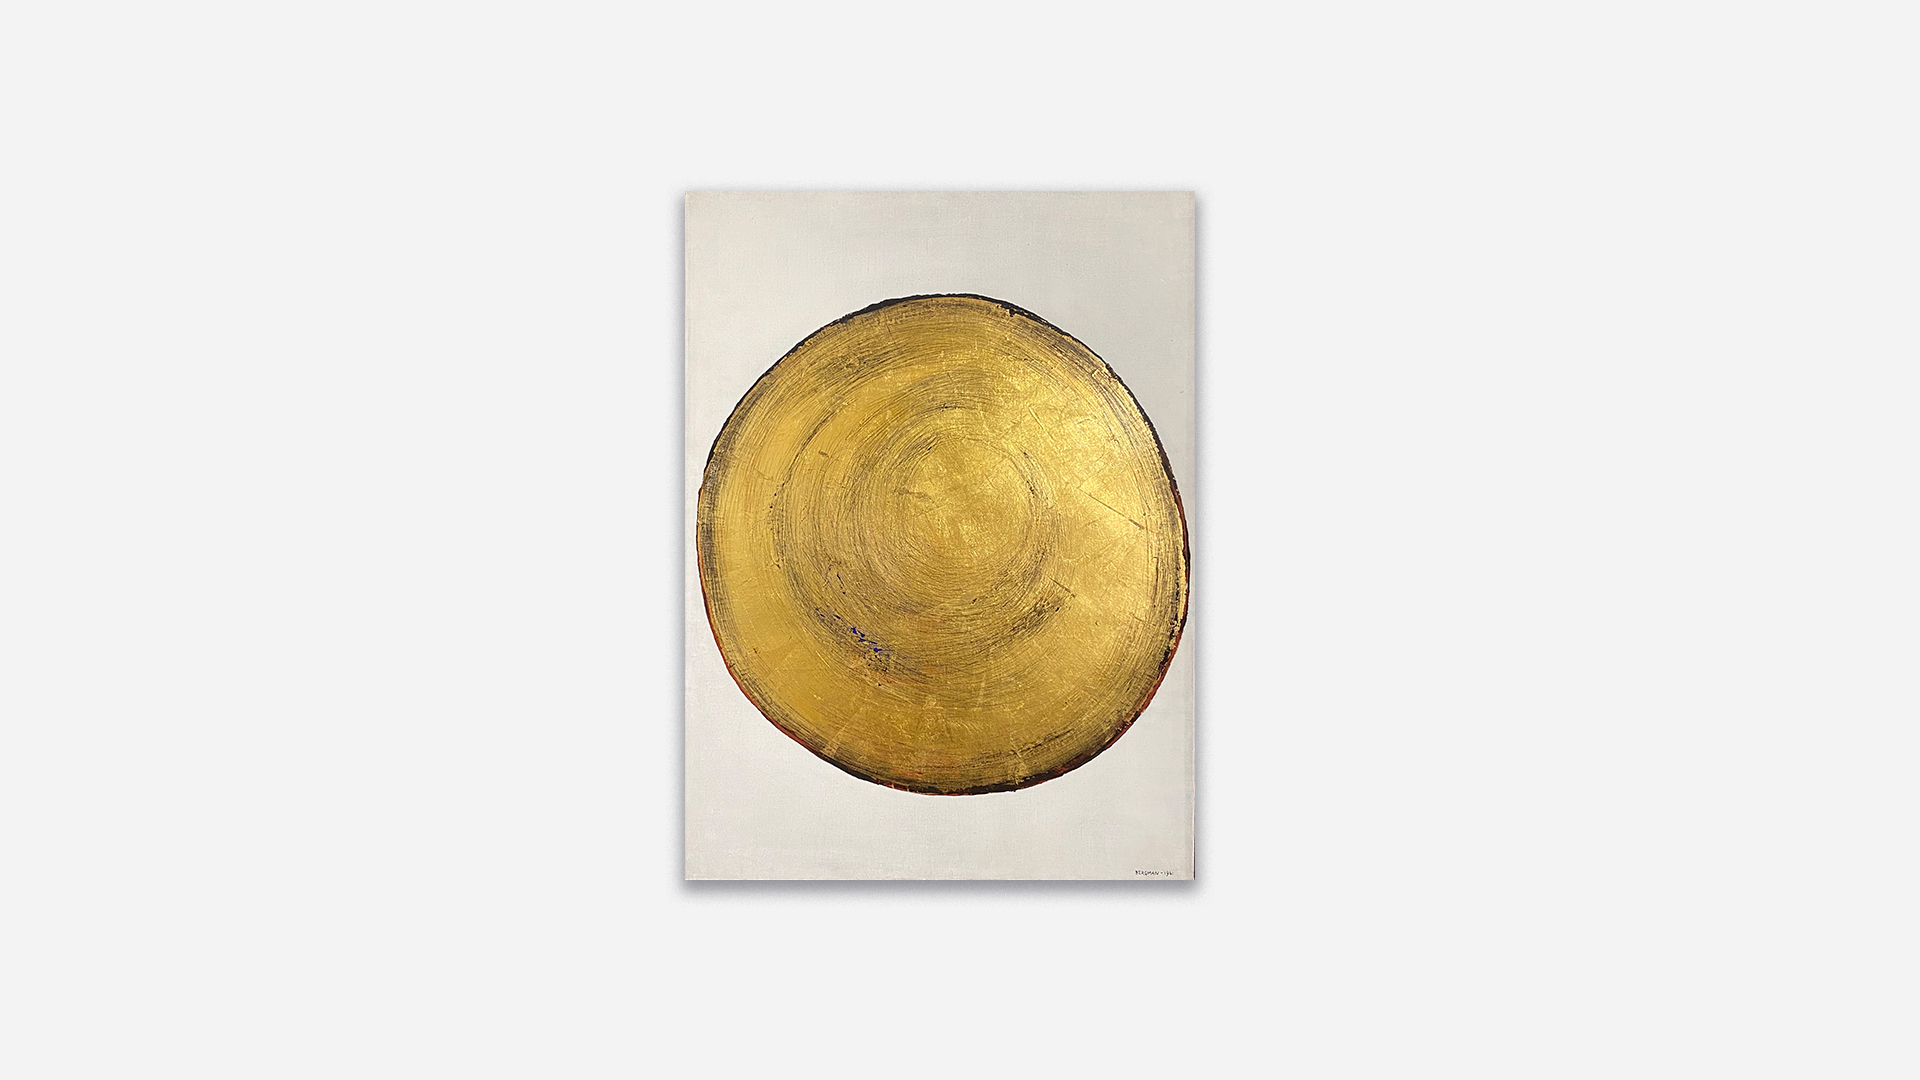 Anna-Eva Bergman, N°37-1961 Astre, 1961, Tempera and metal leaf on canvas, 73 x 54 cm